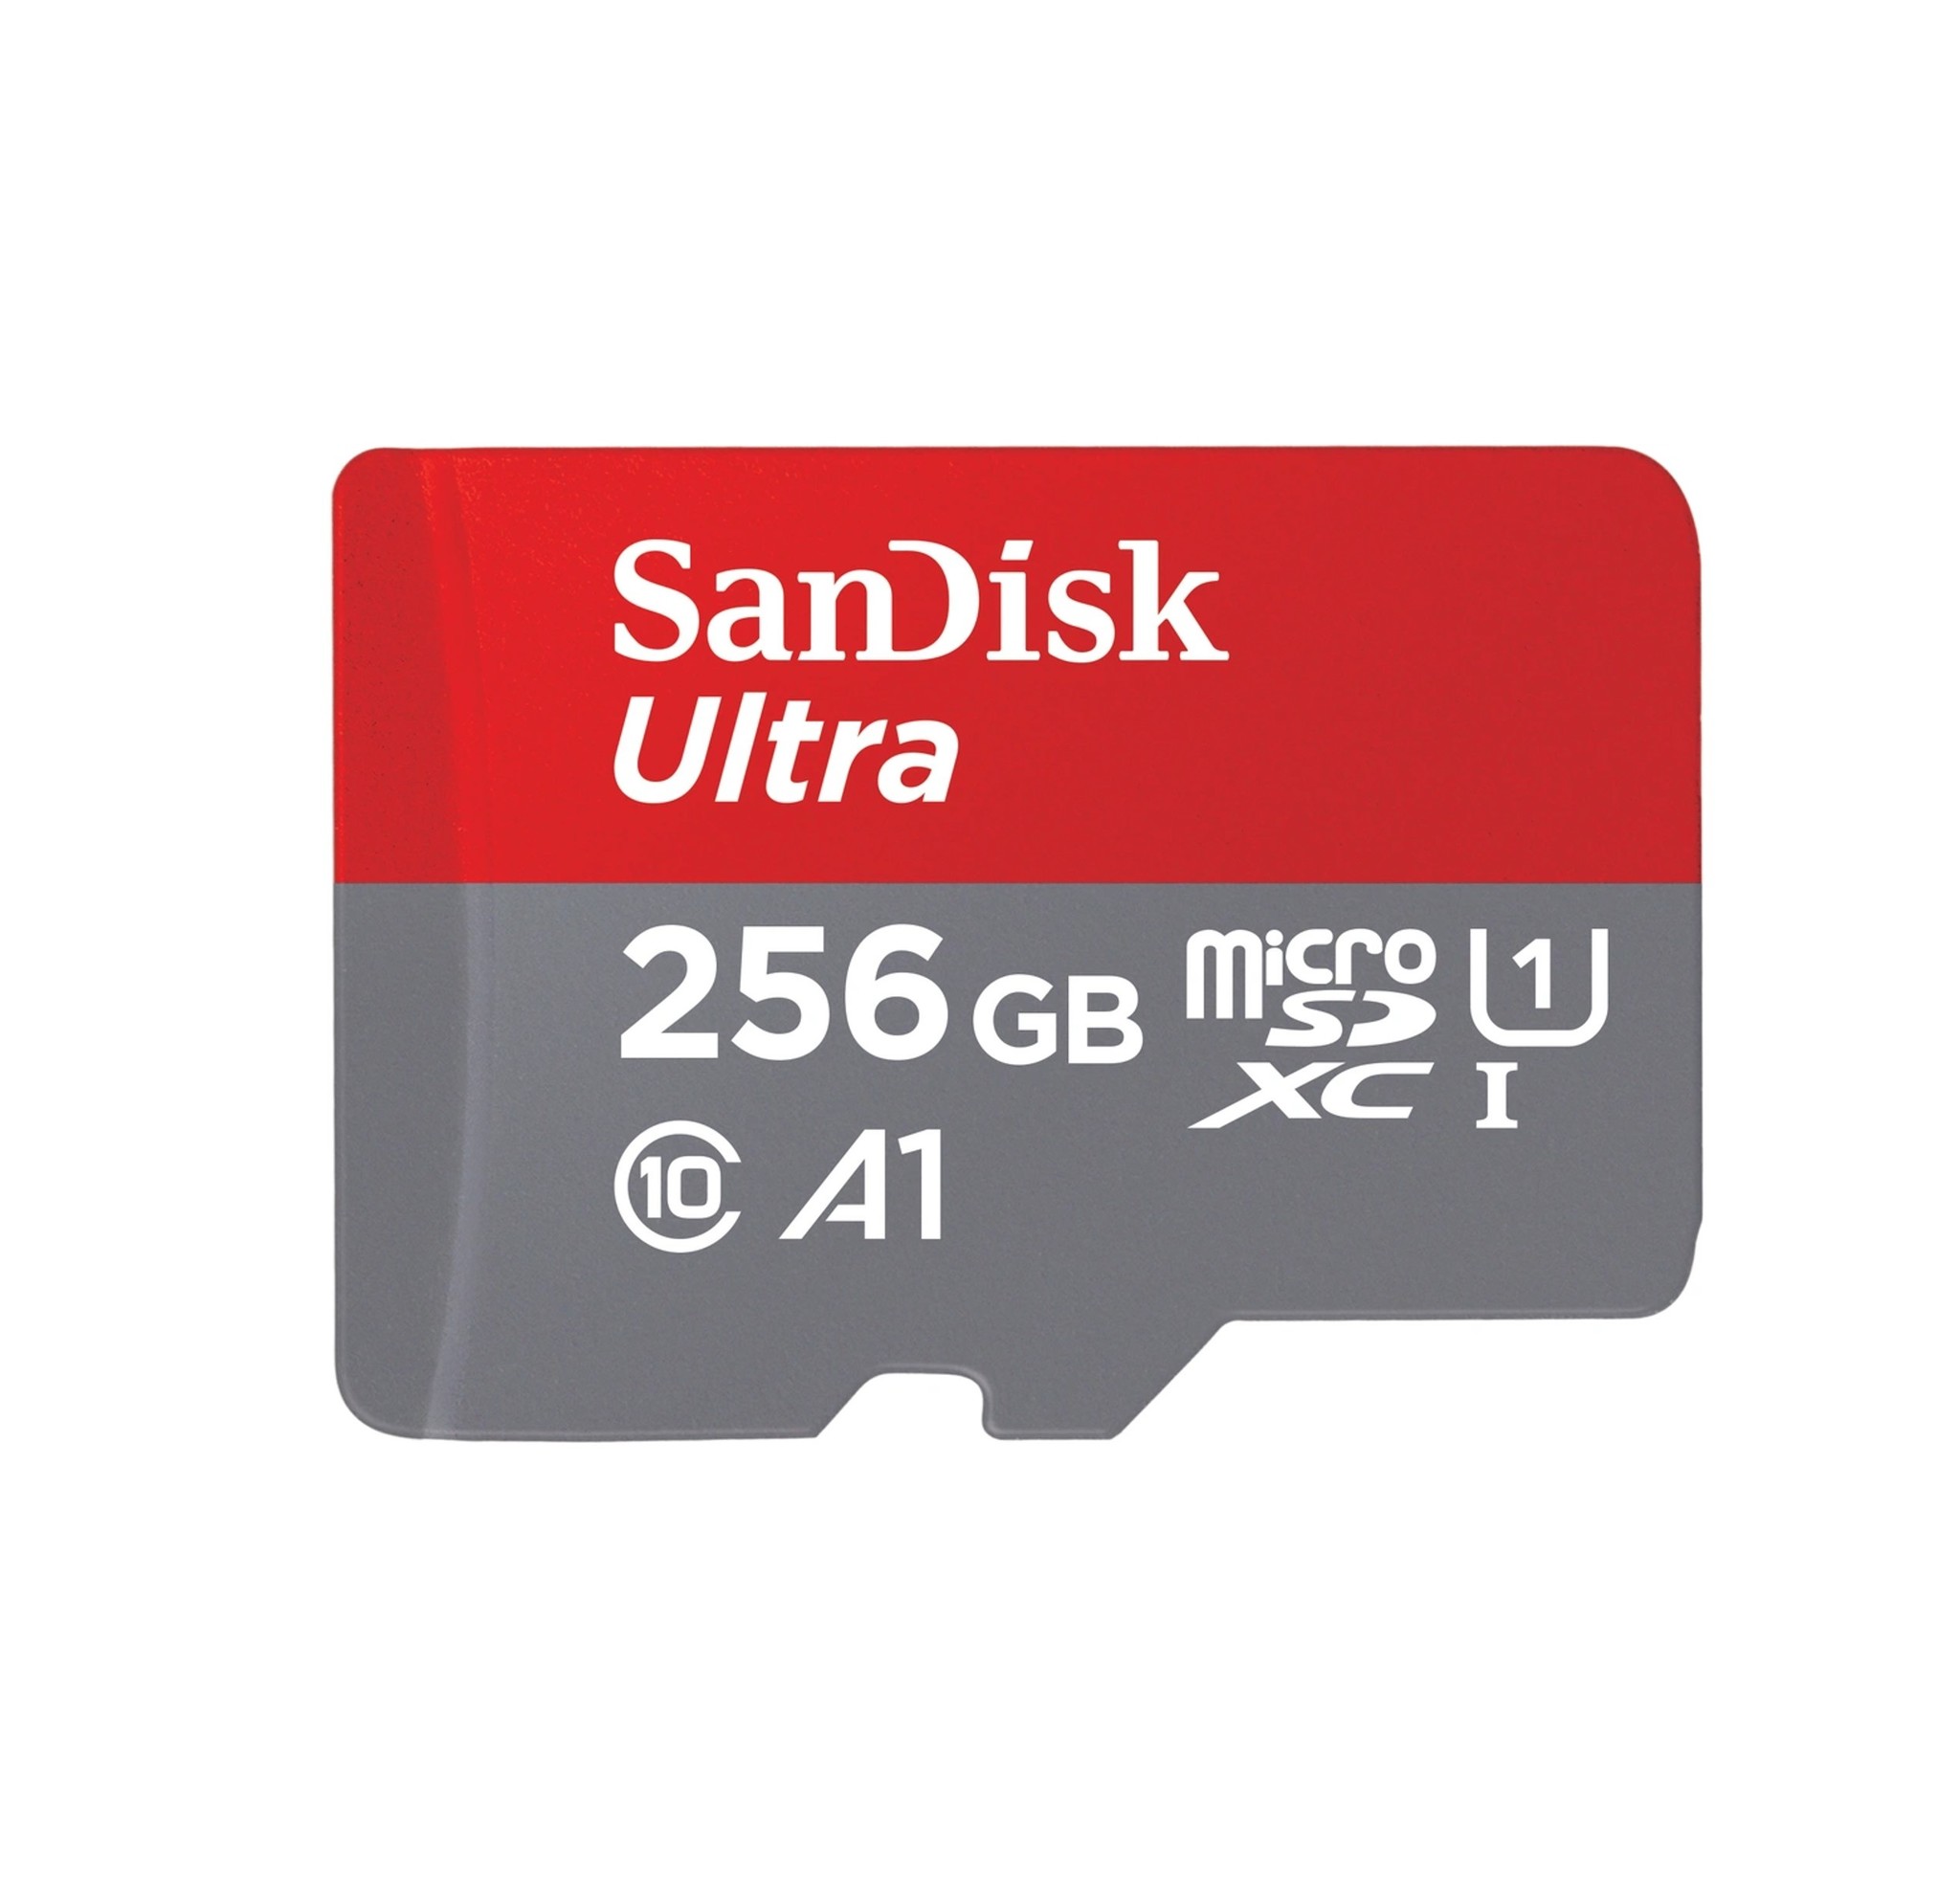 Verward schrobben auditie SanDisk Micro SD HC-kaart 256 GB Class 10 - Rietveld Webshop